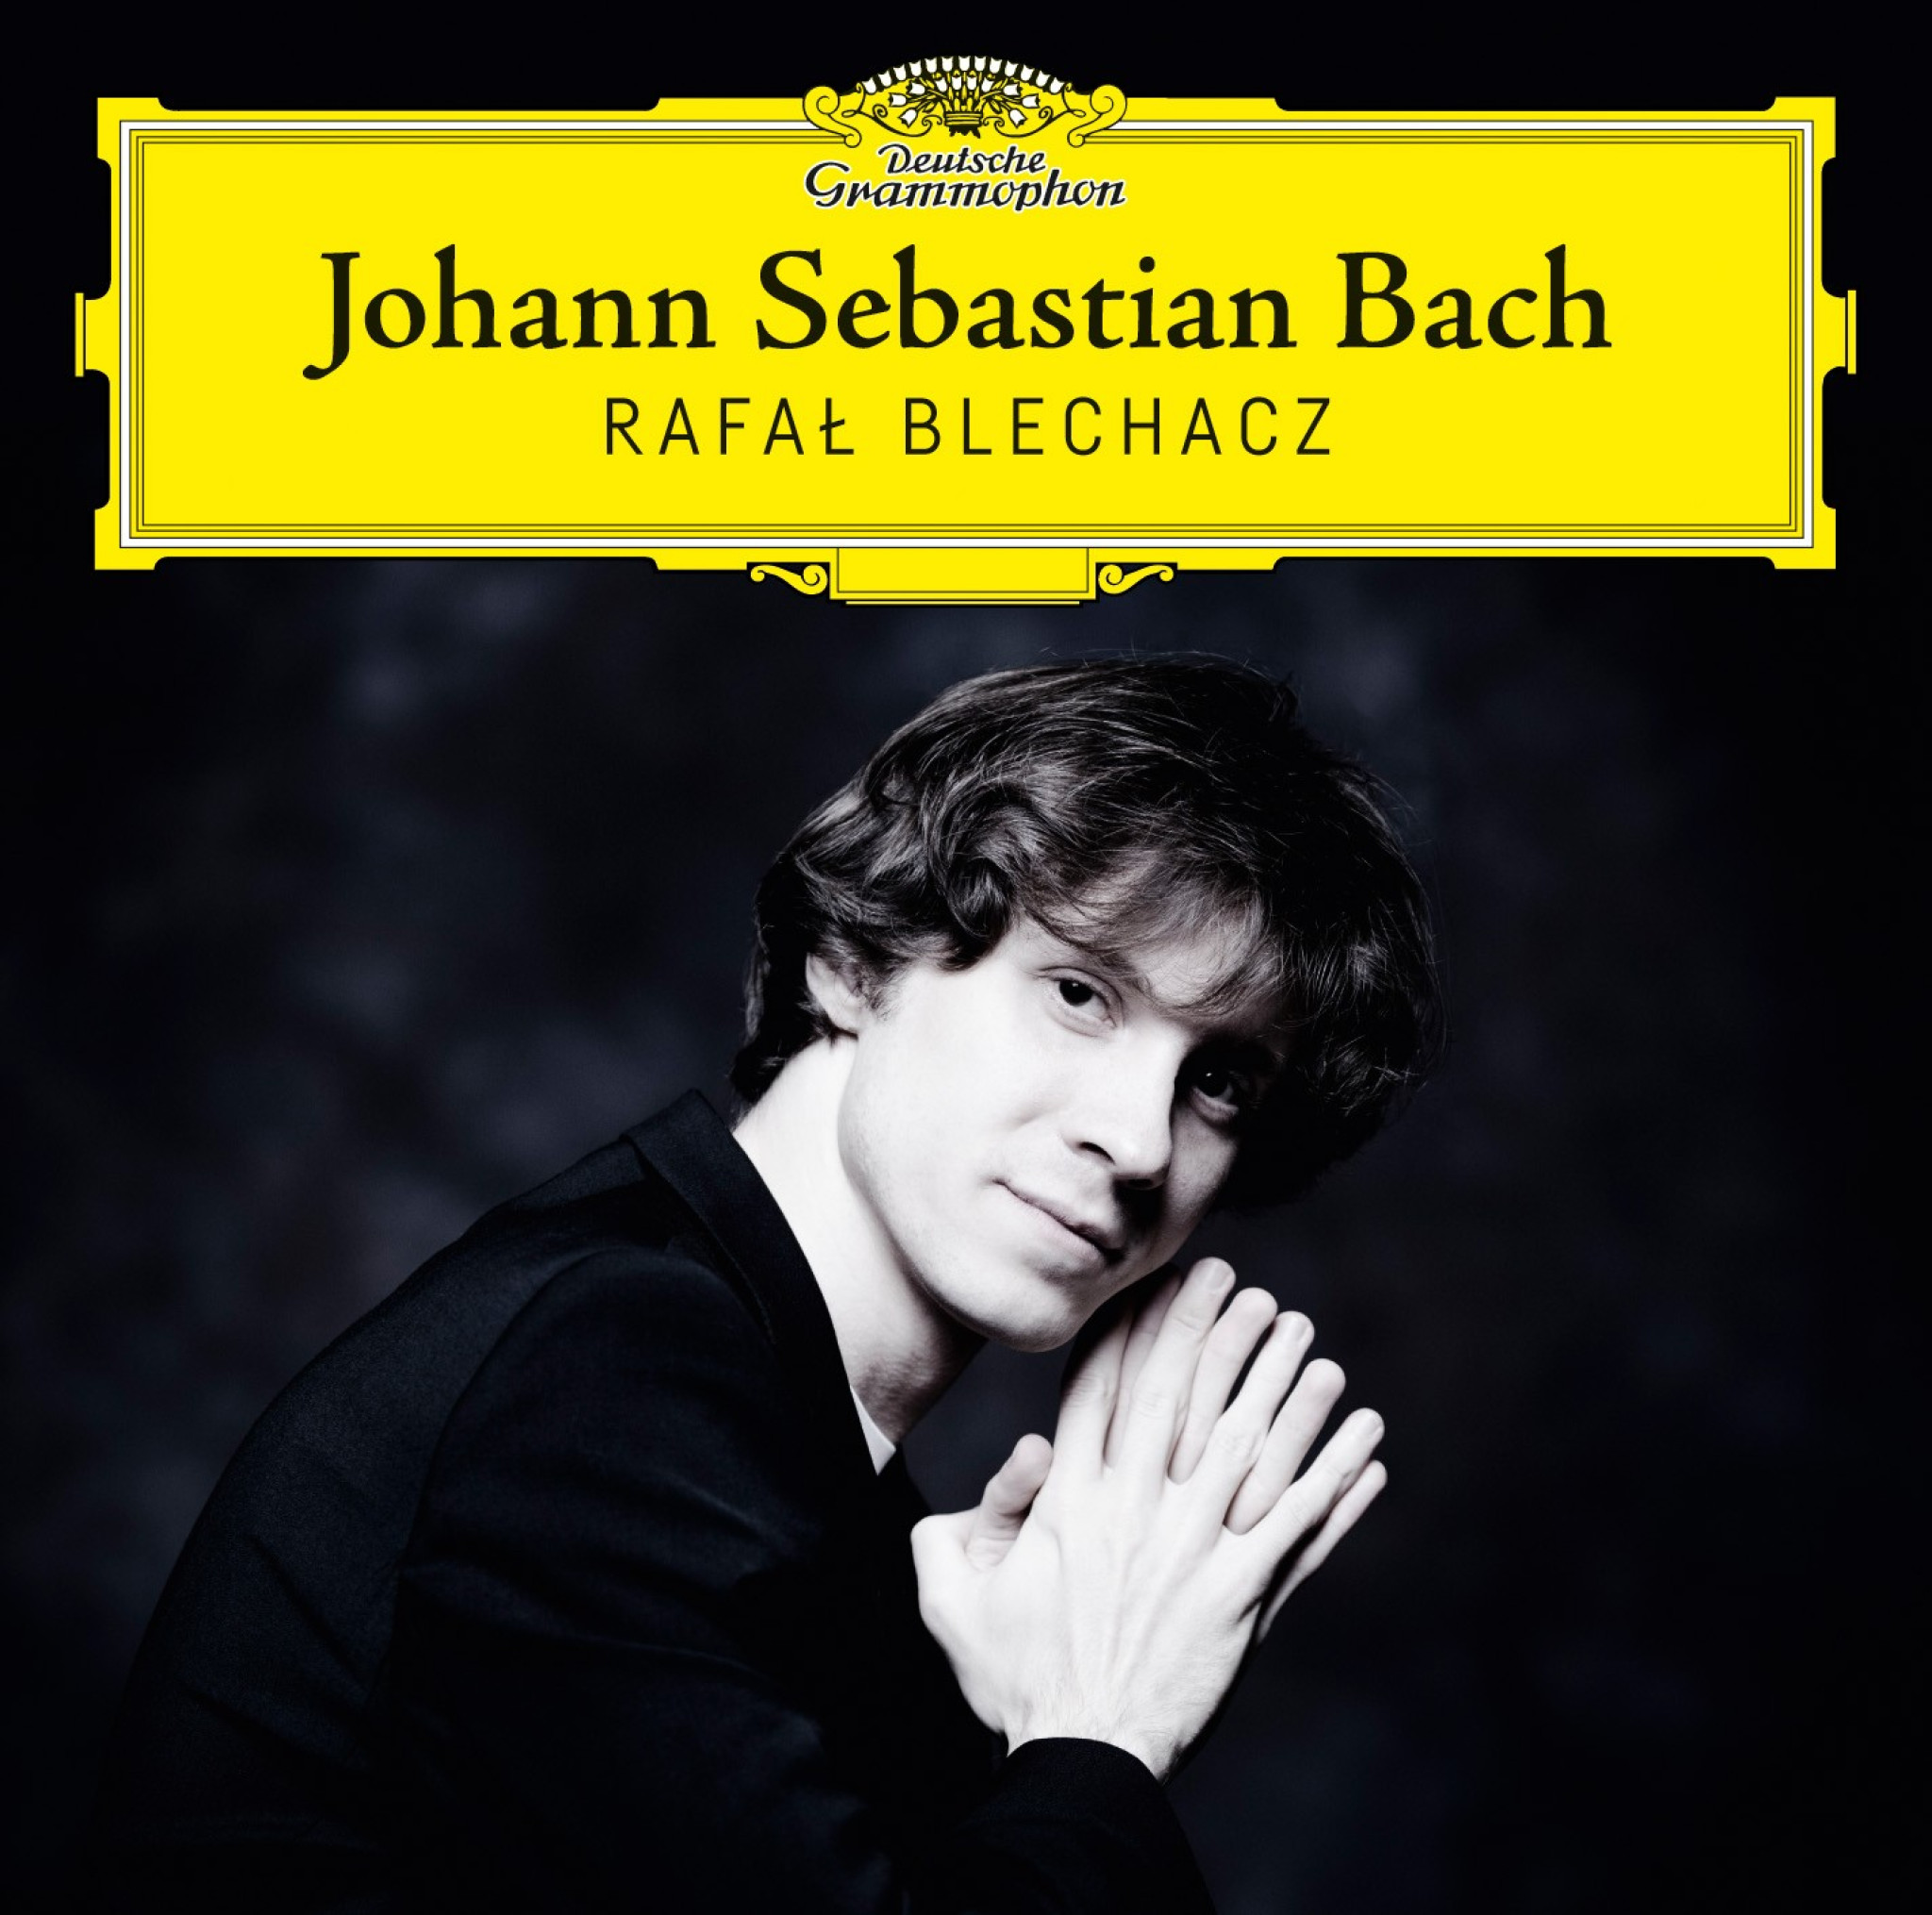 Rafal Blechacz - Johann Sebastian Bach